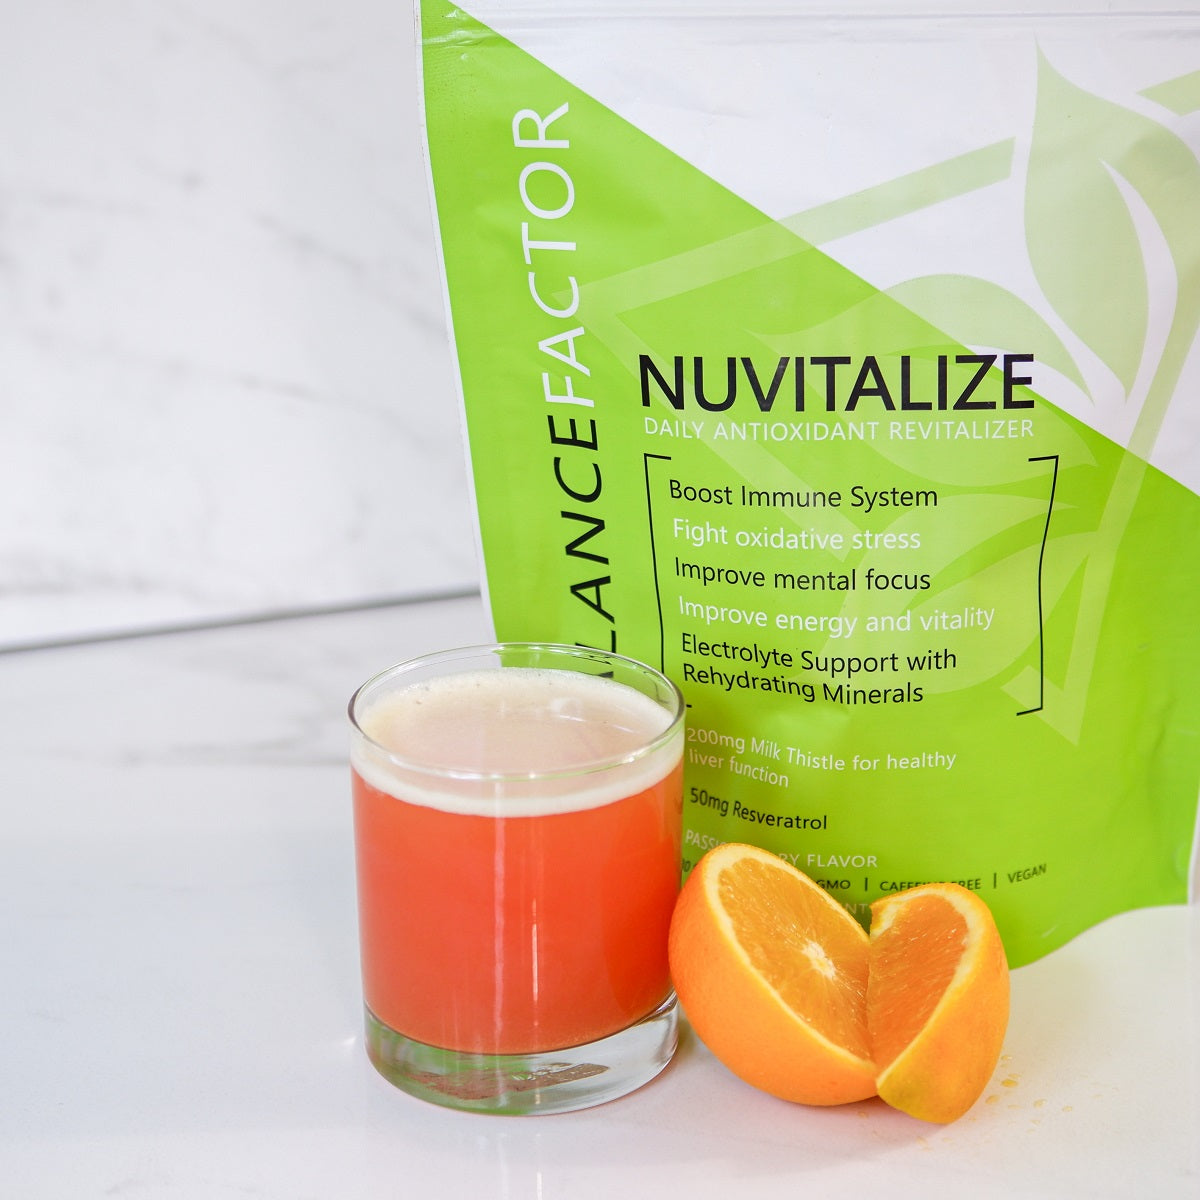 FREE Nuvitalize Antioxidant Revitalizer